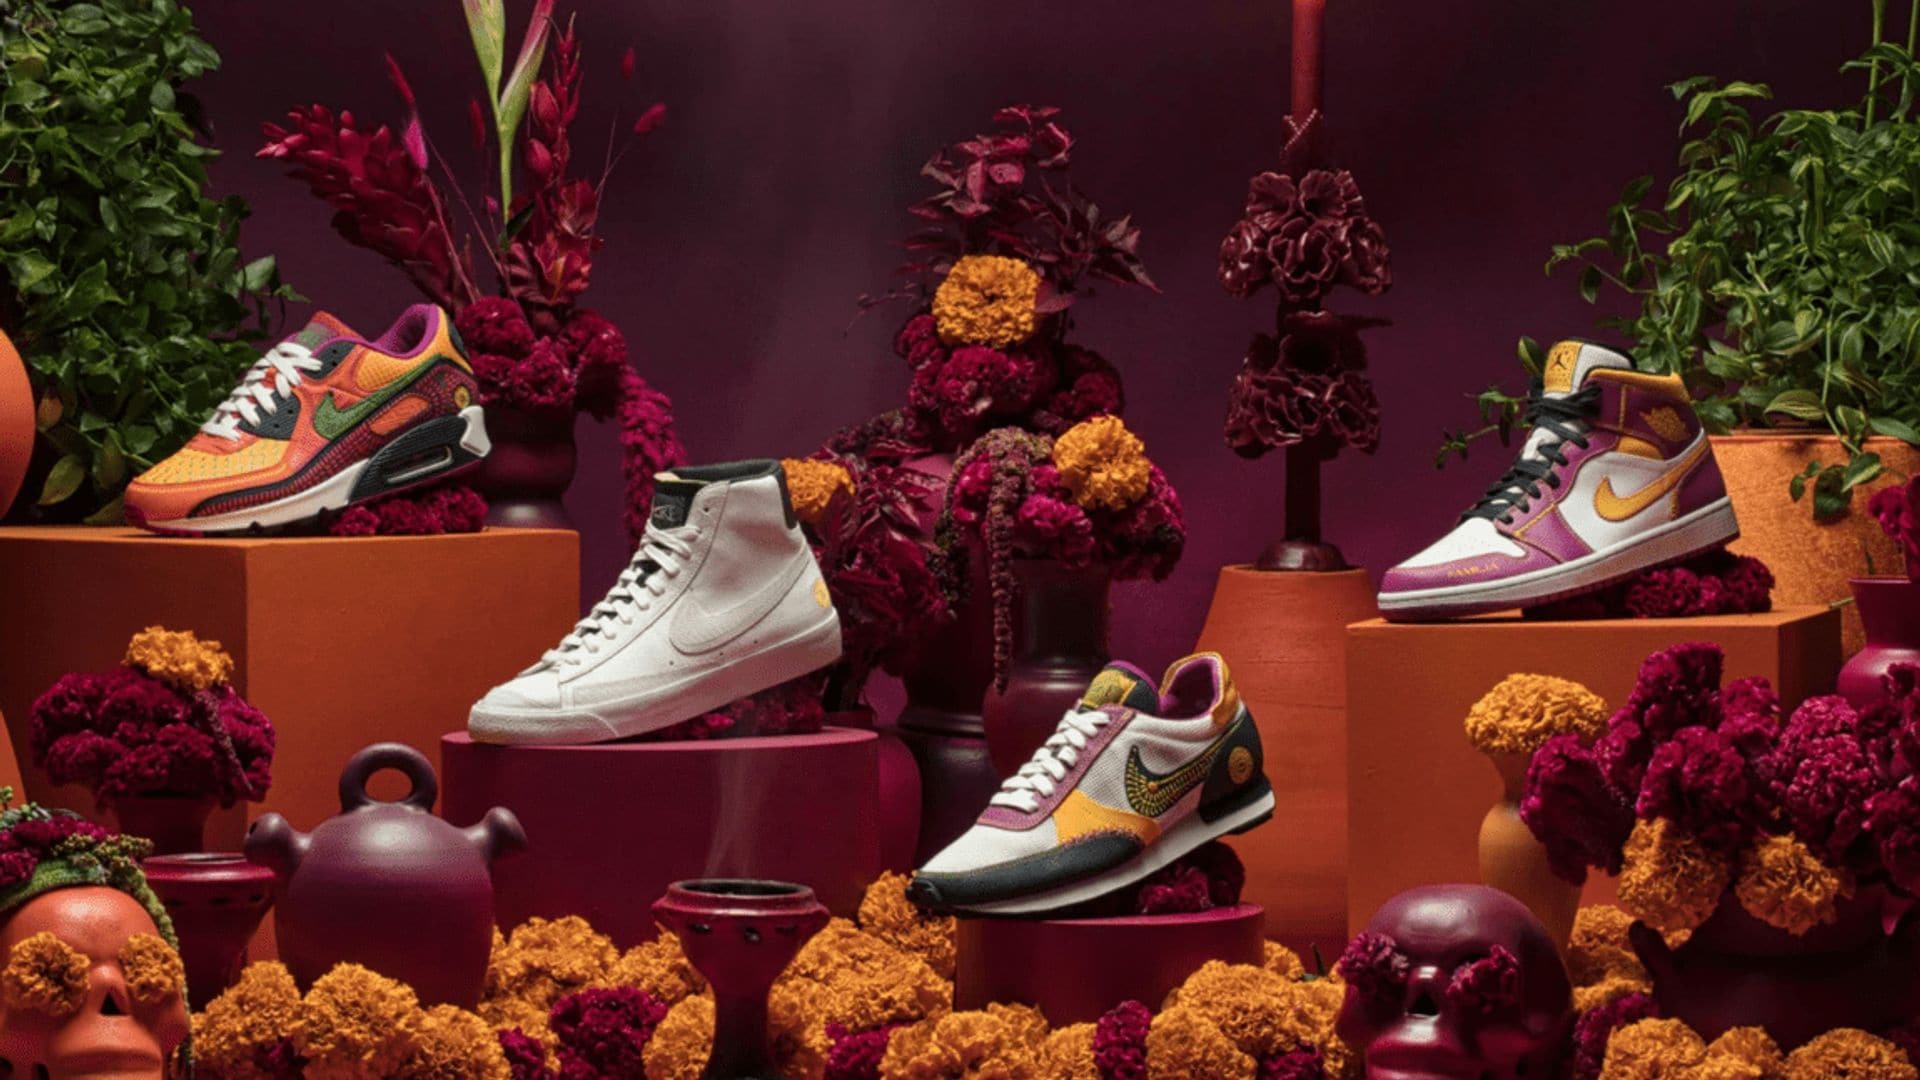 Nike and Adidas both launch sneakers in honor of Día de Muertos